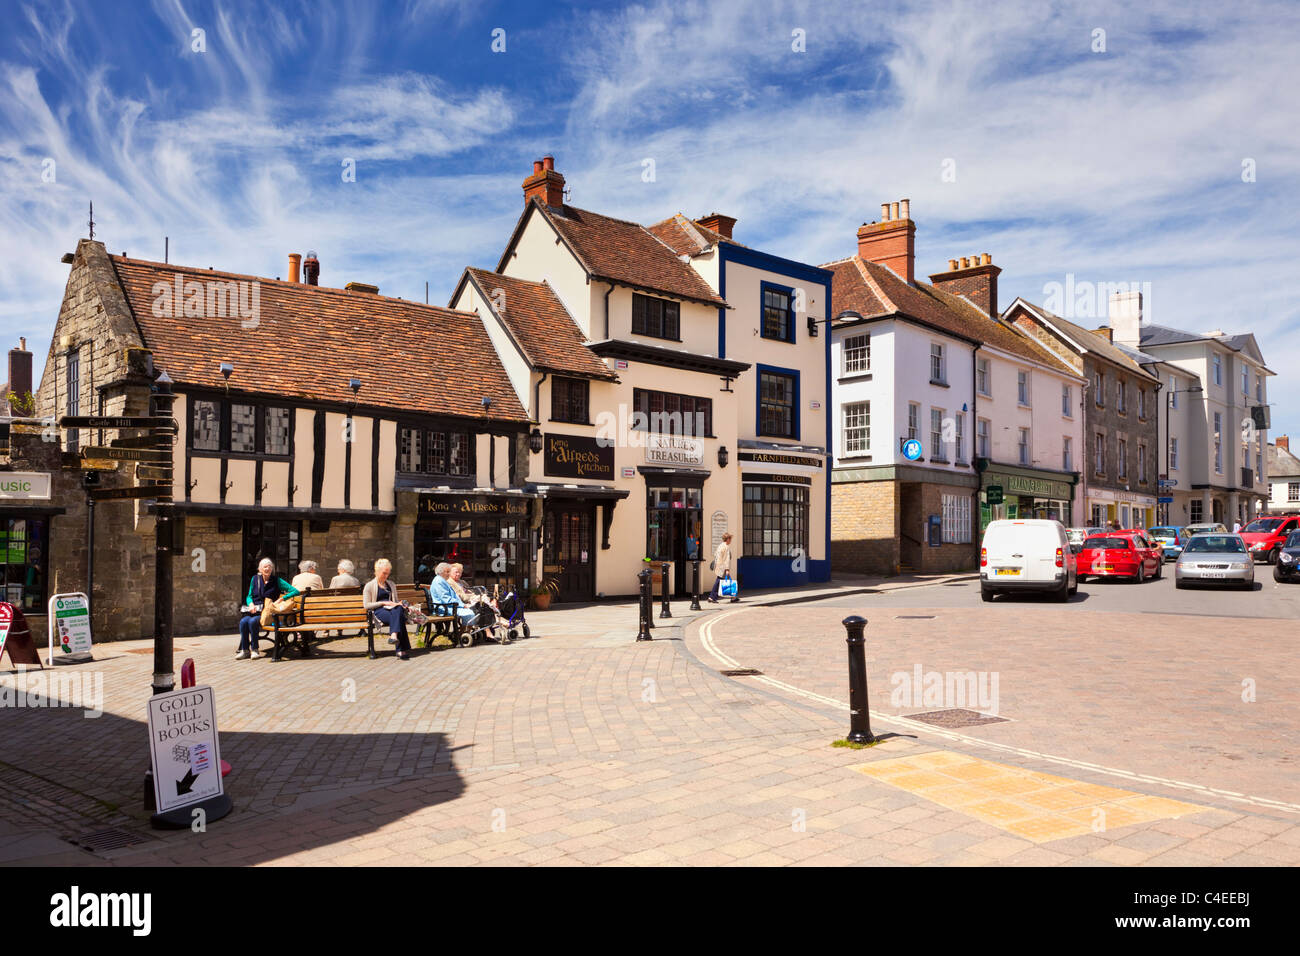 Old high street scene in Shaftesbury, Dorset, England UK Stock Photo